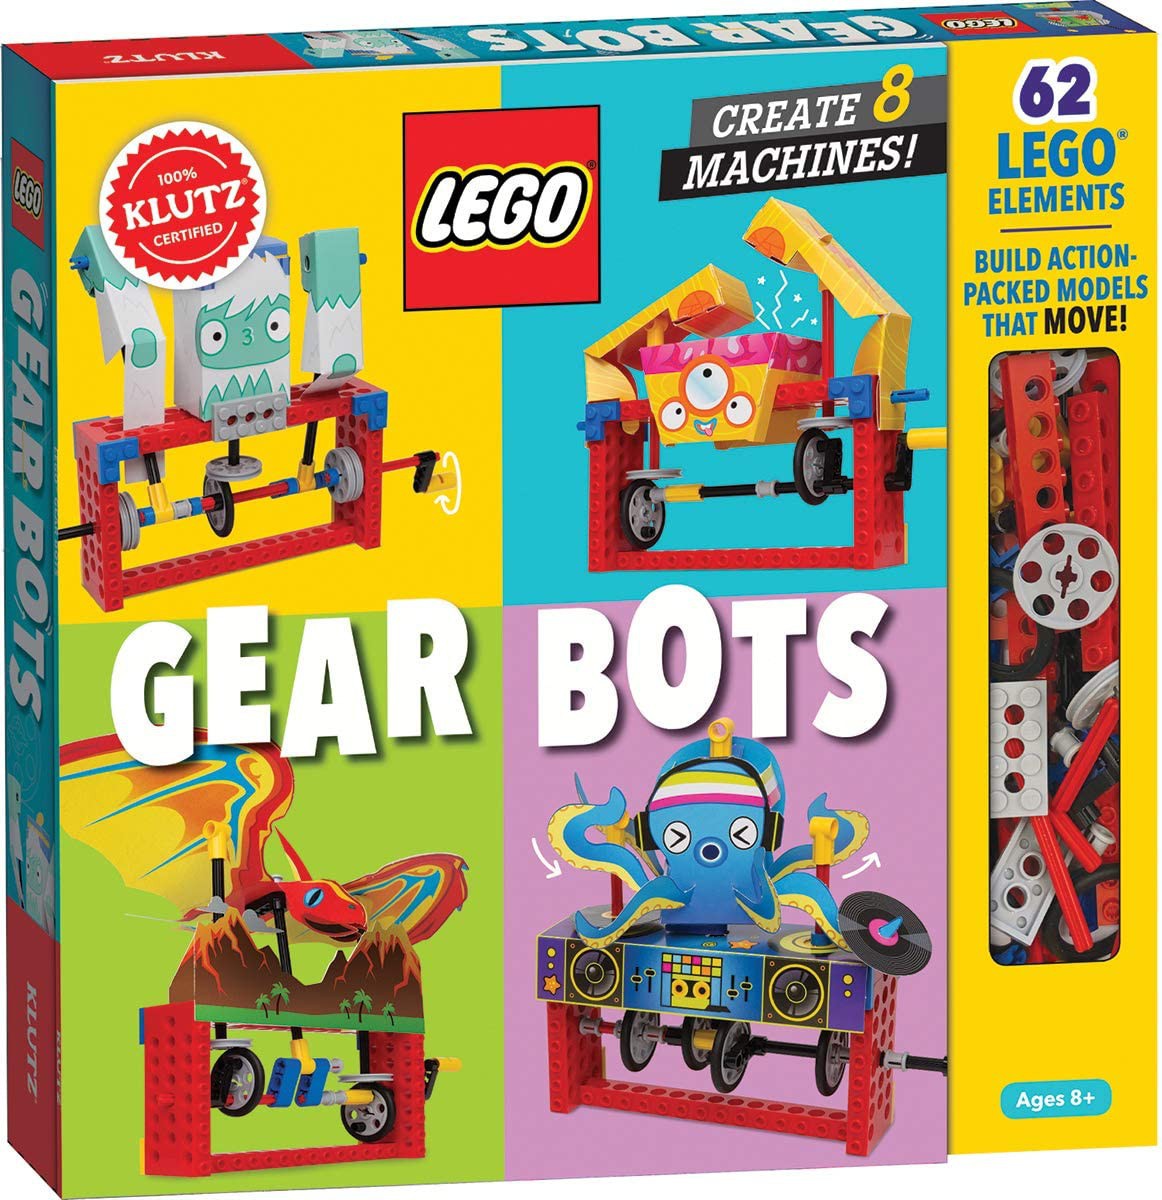  Lego Gear Bots Science/STEM Activity Kit - Klutz